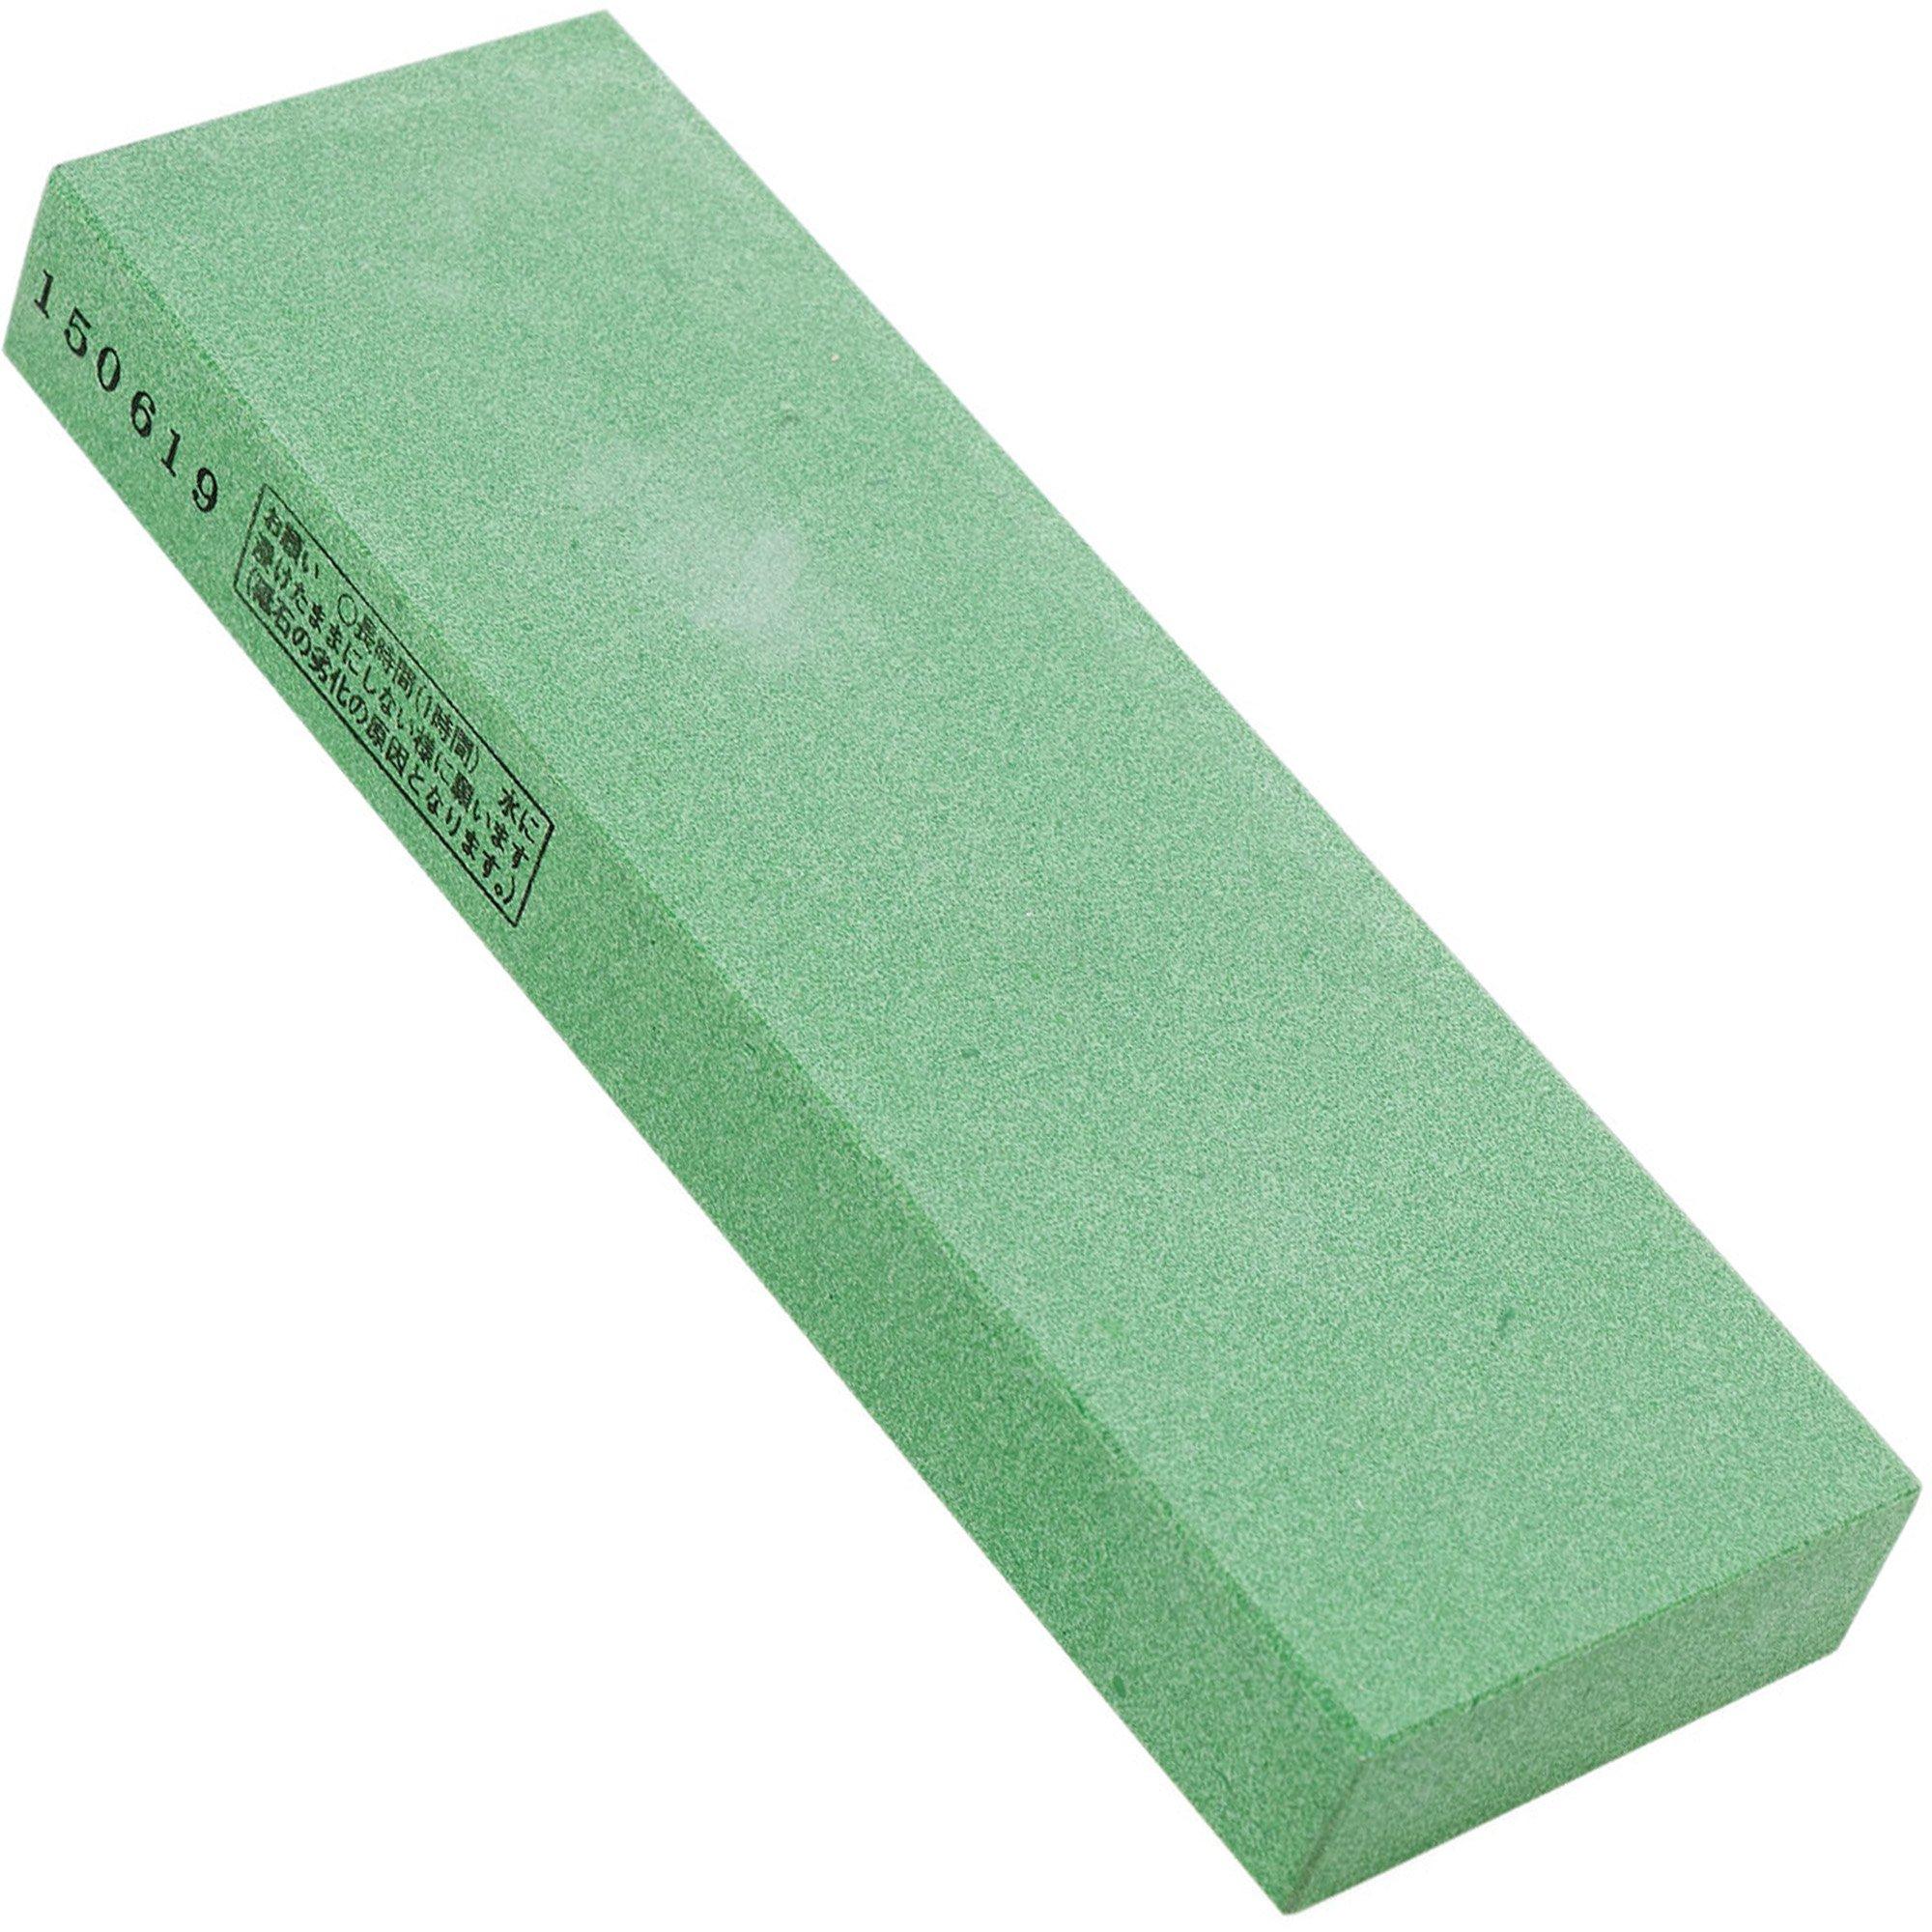 Miyabi Toishi Pro 1000 Grit Ceramic Water Sharpening Stone - Green - 5  requests